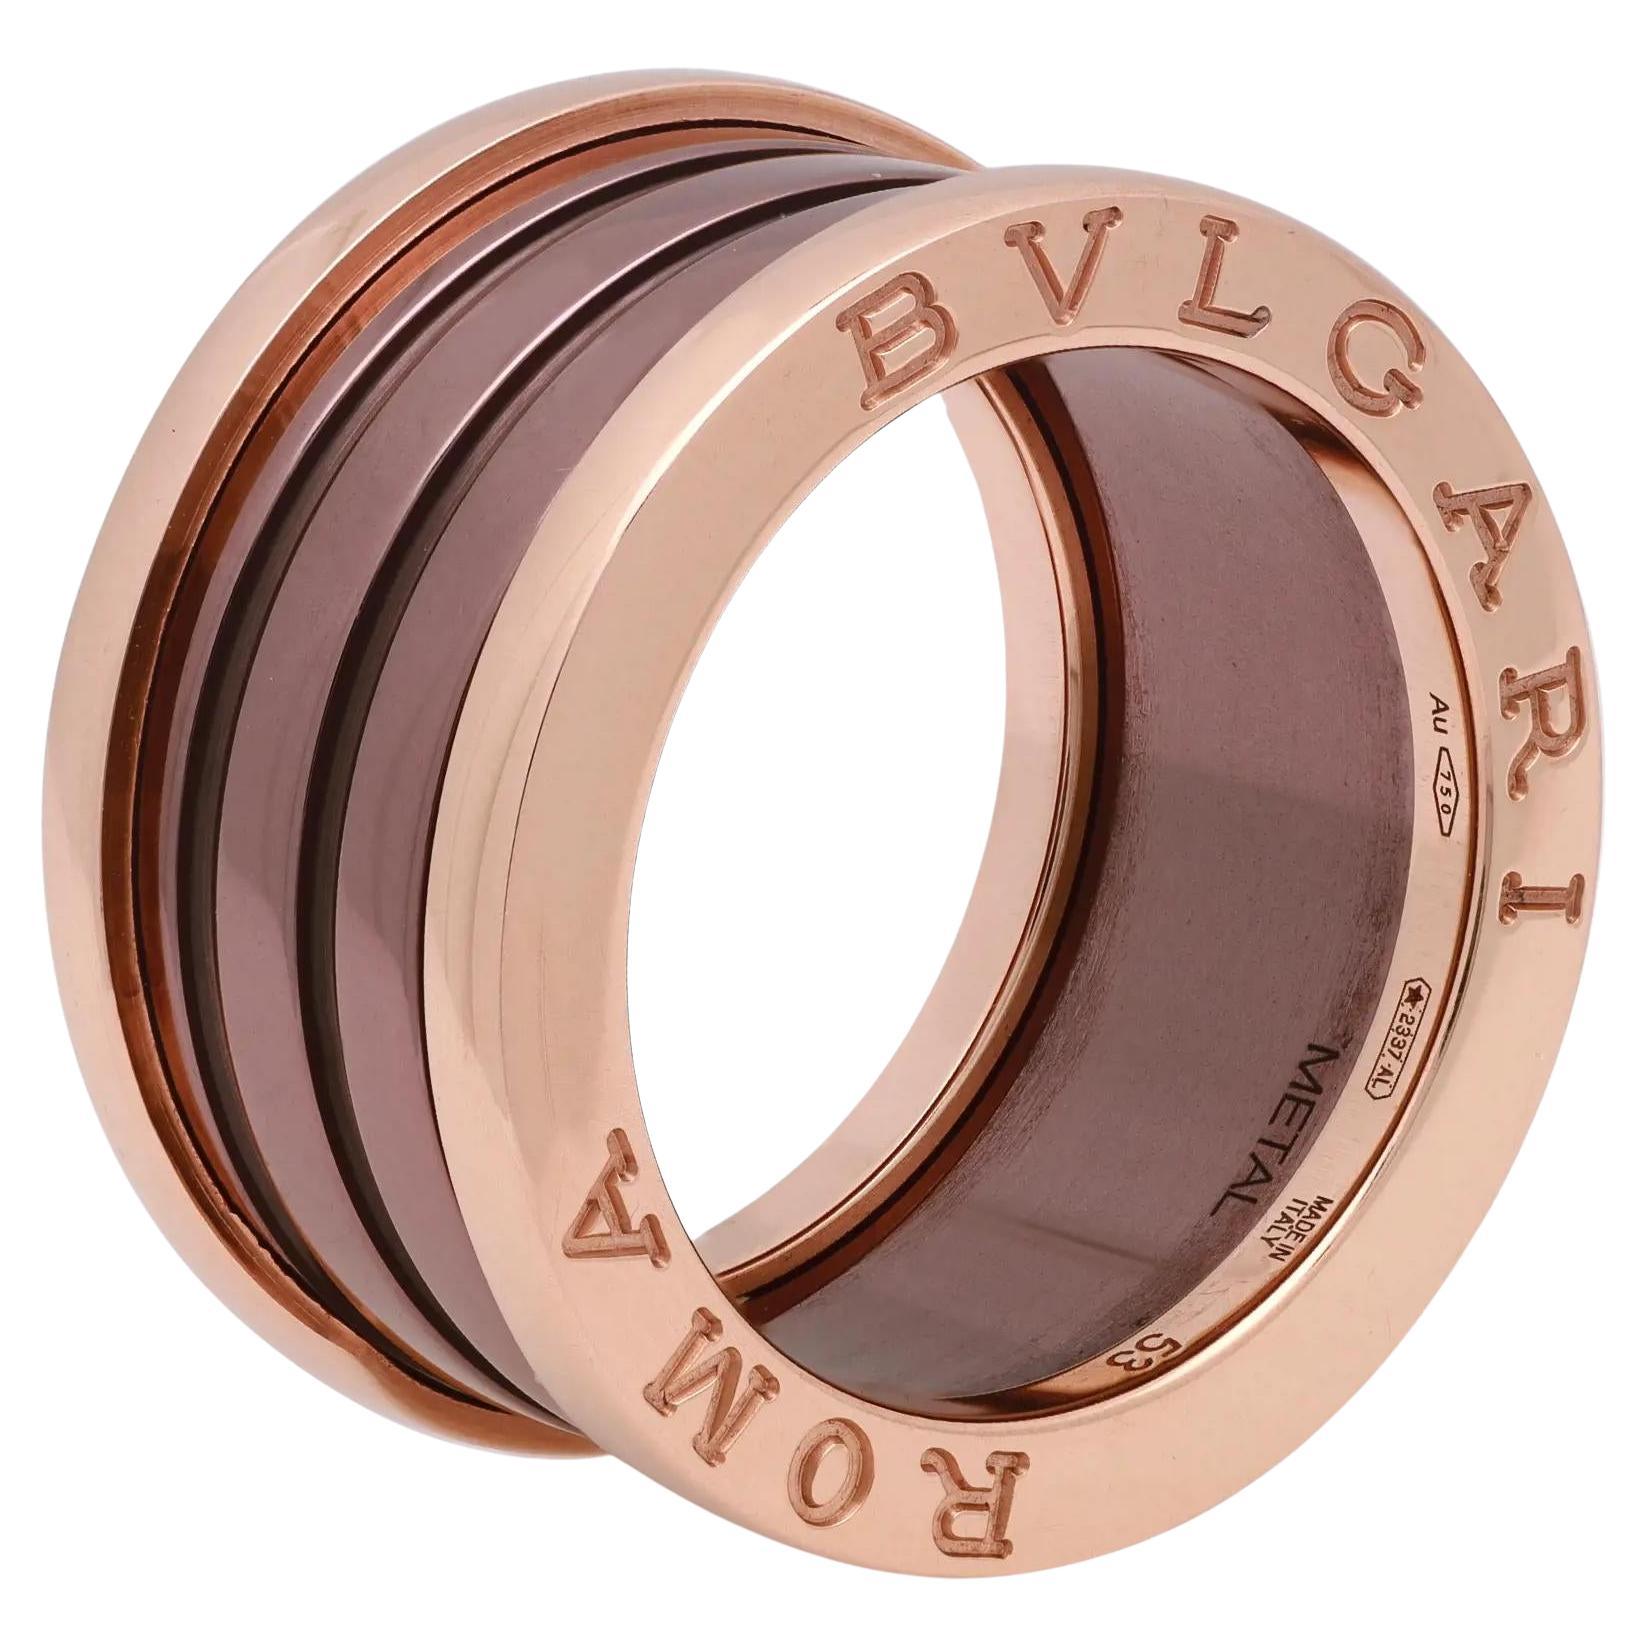 Bvlgari B.Zero1 Four Band Ring 18K Rose Gold and Ceramic